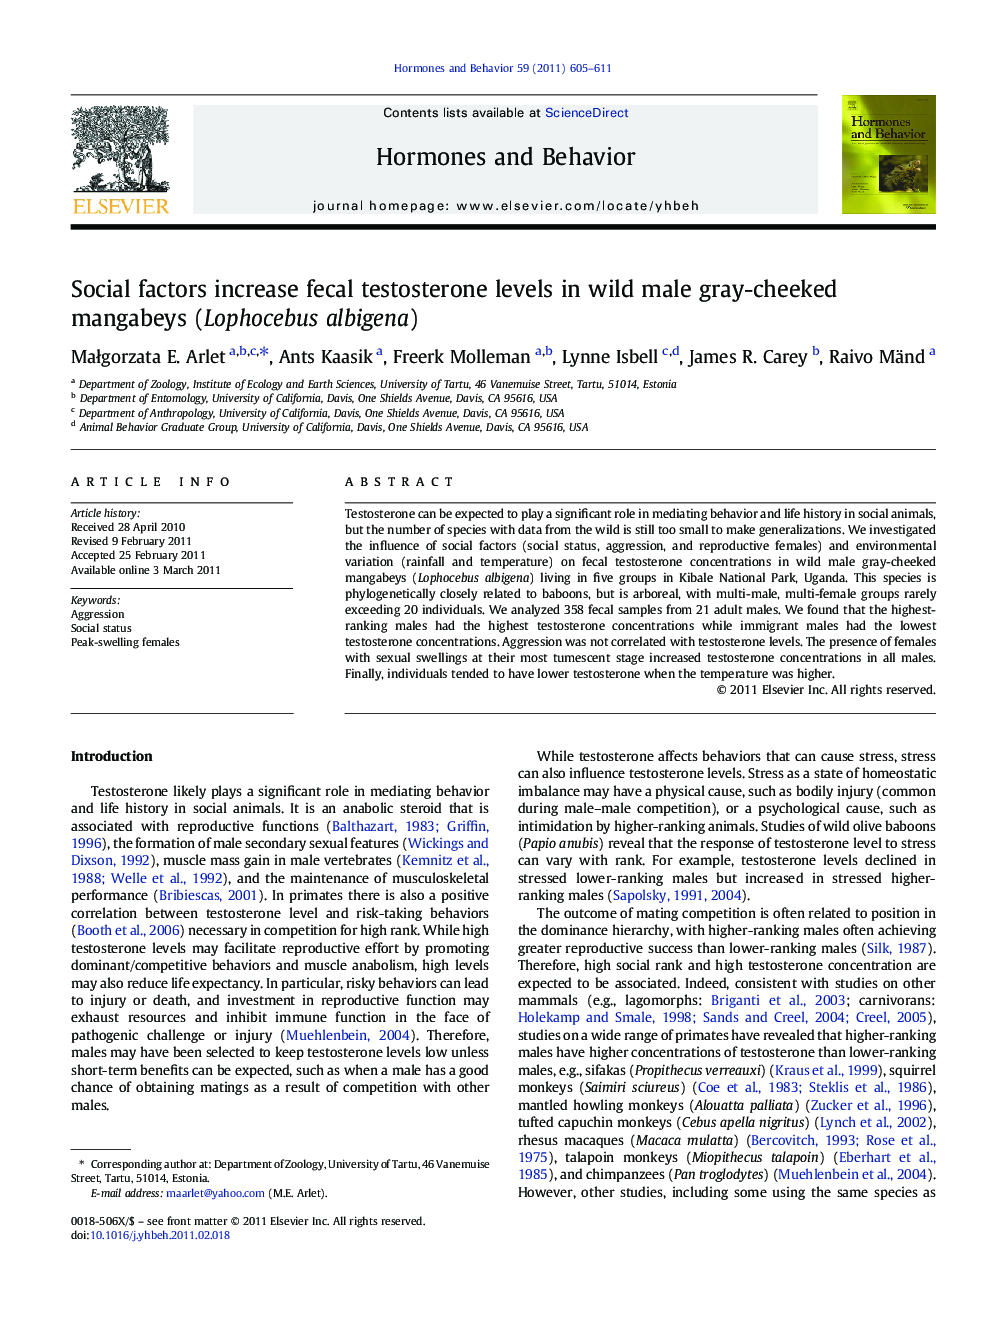 Social factors increase fecal testosterone levels in wild male gray-cheeked mangabeys (Lophocebus albigena)